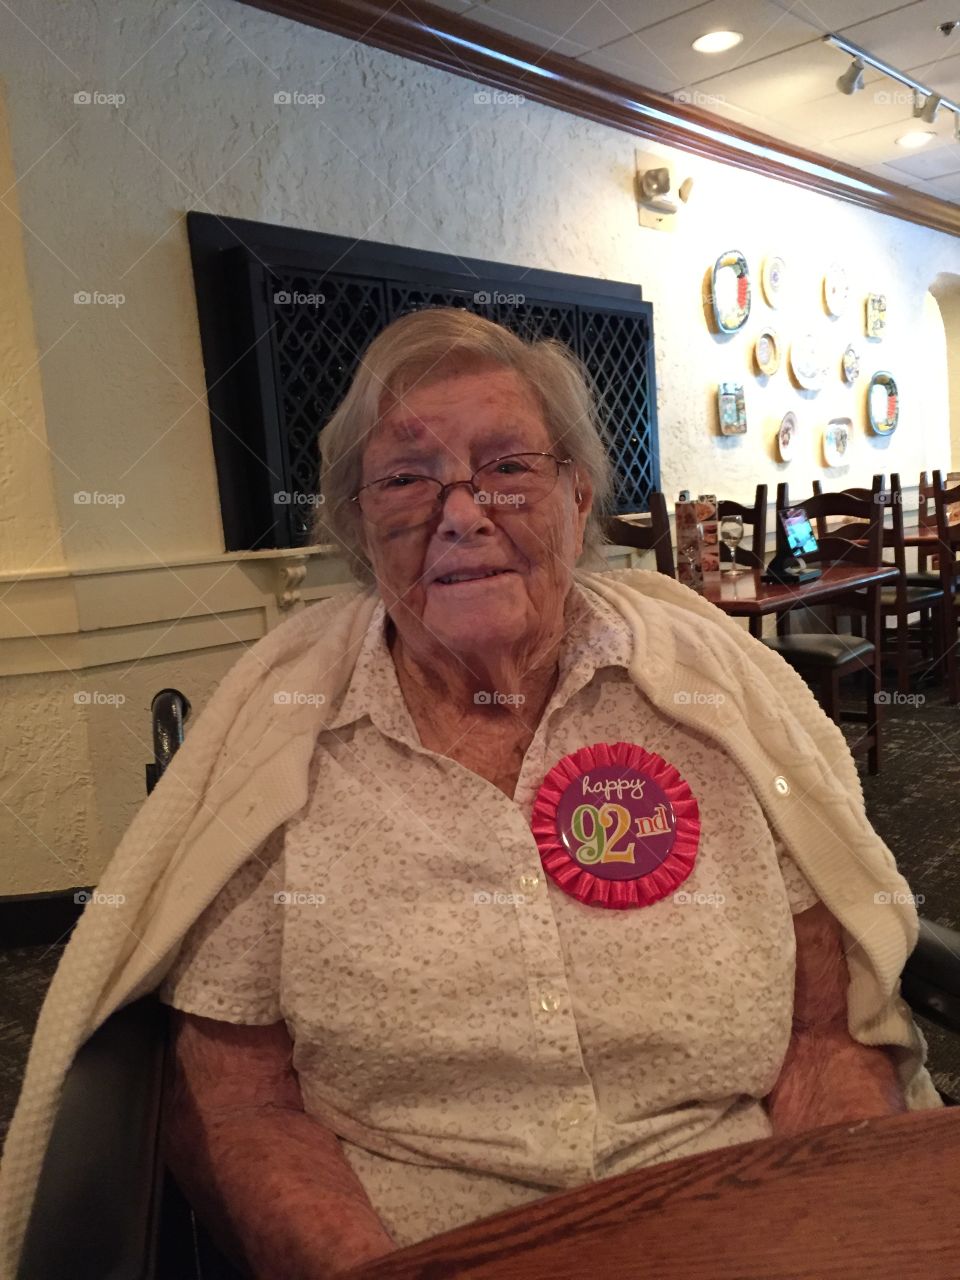 The birthday girl!  Mom celebrates her big 92nd!